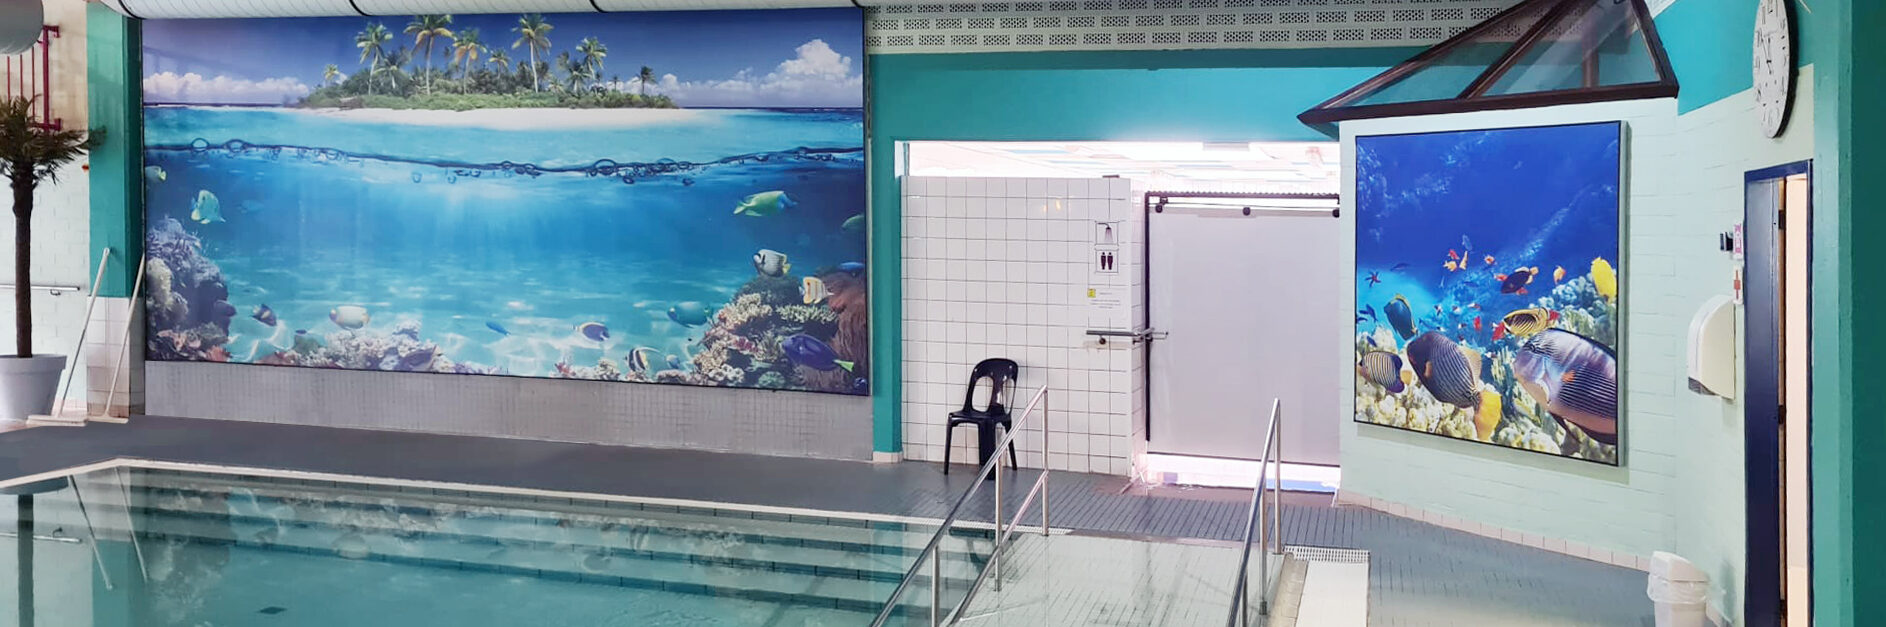 verbetering akoestiek zwembad vakantiehuis fabiola met pool sound absorbers van MetroXL